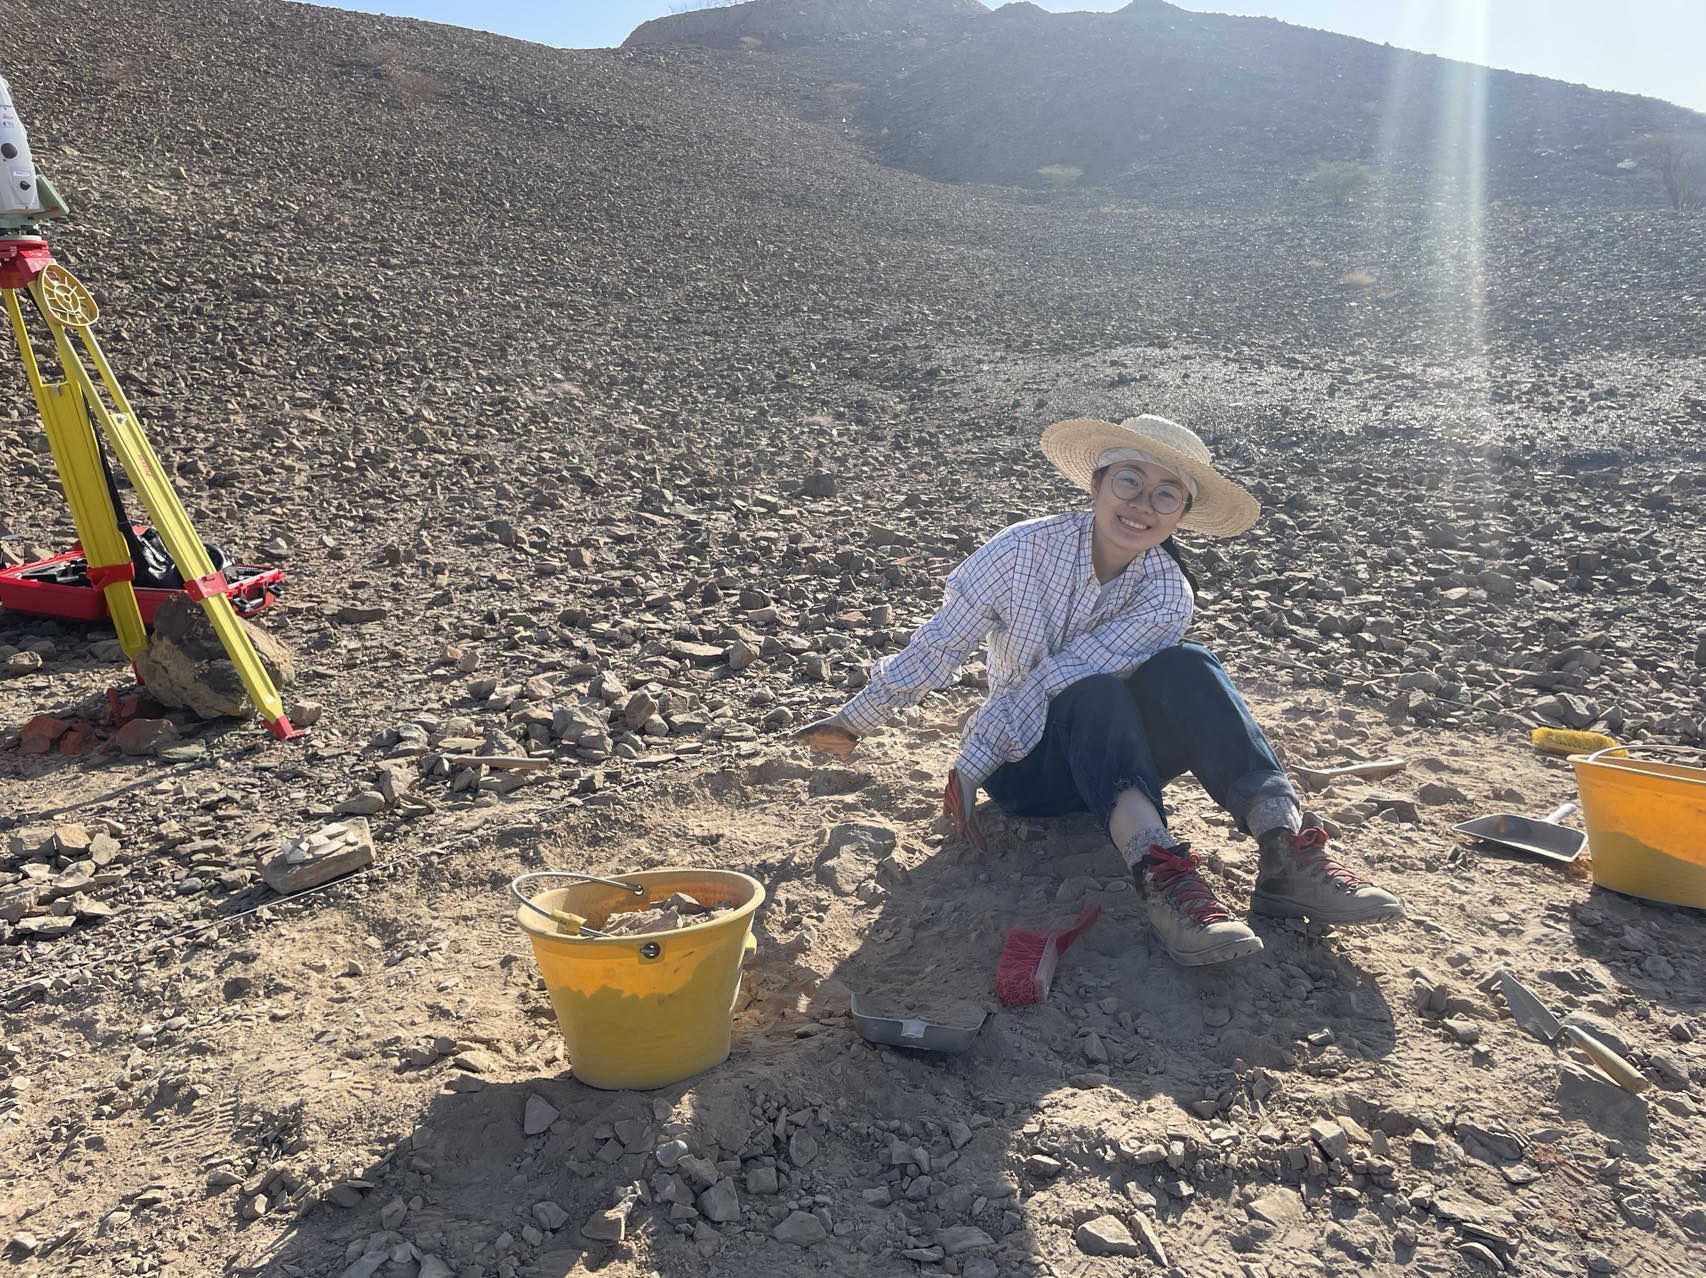 Qi Liu on excavation in Oman.